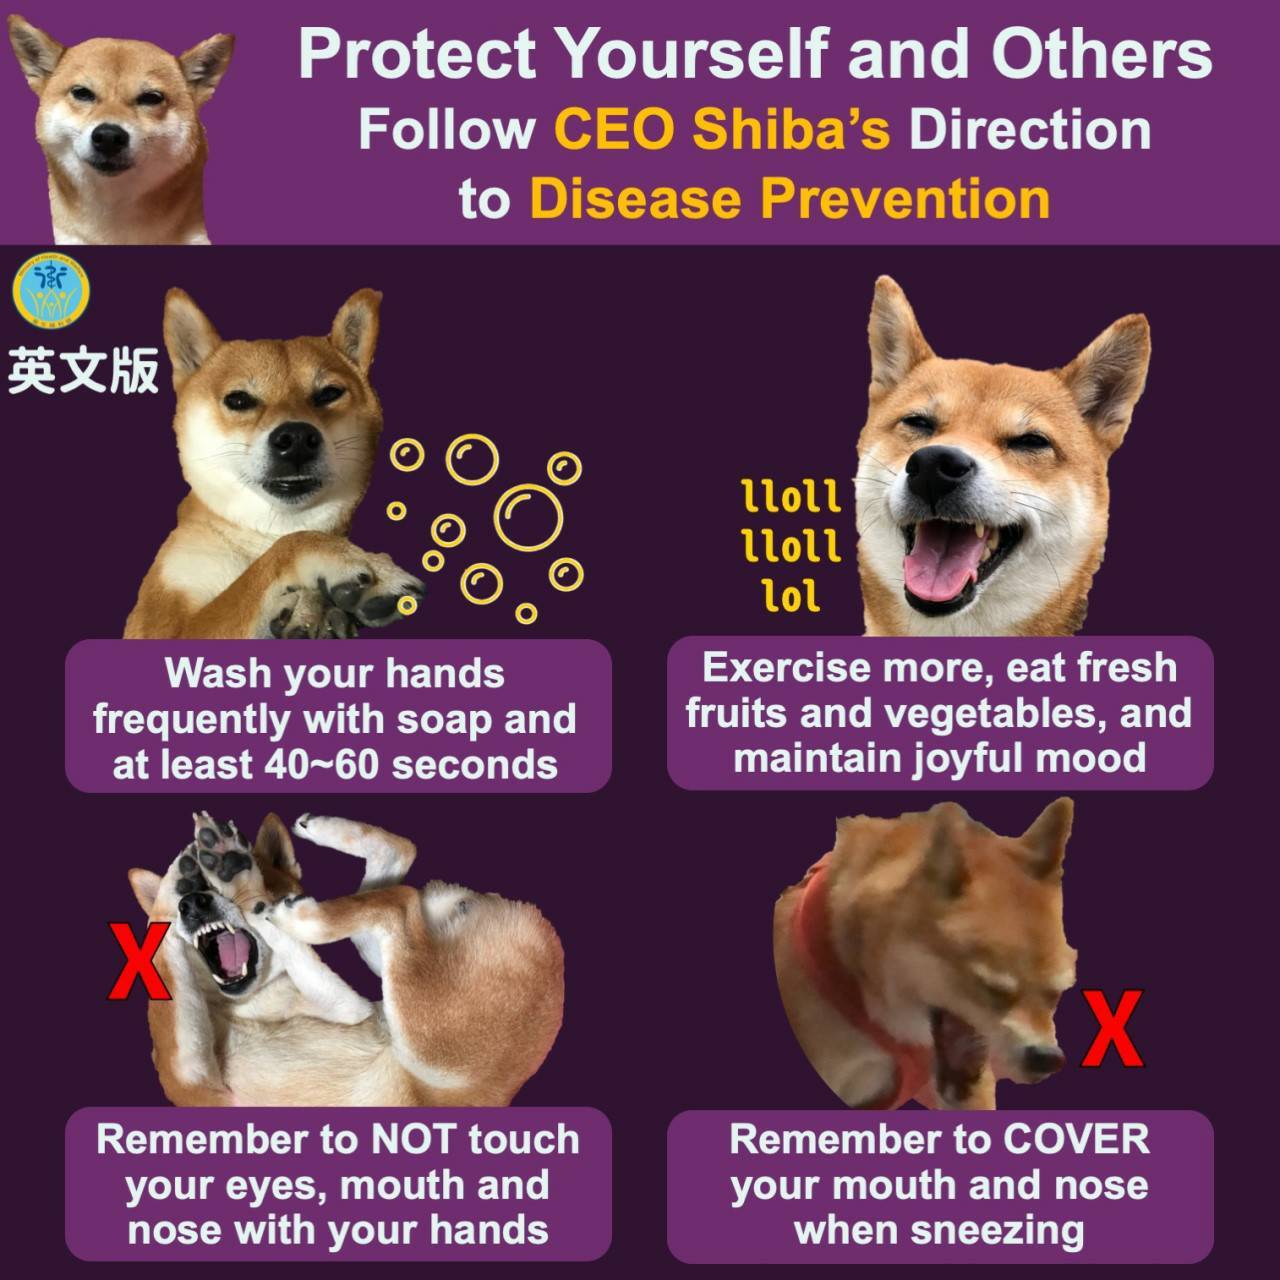  Epidemic prevention information